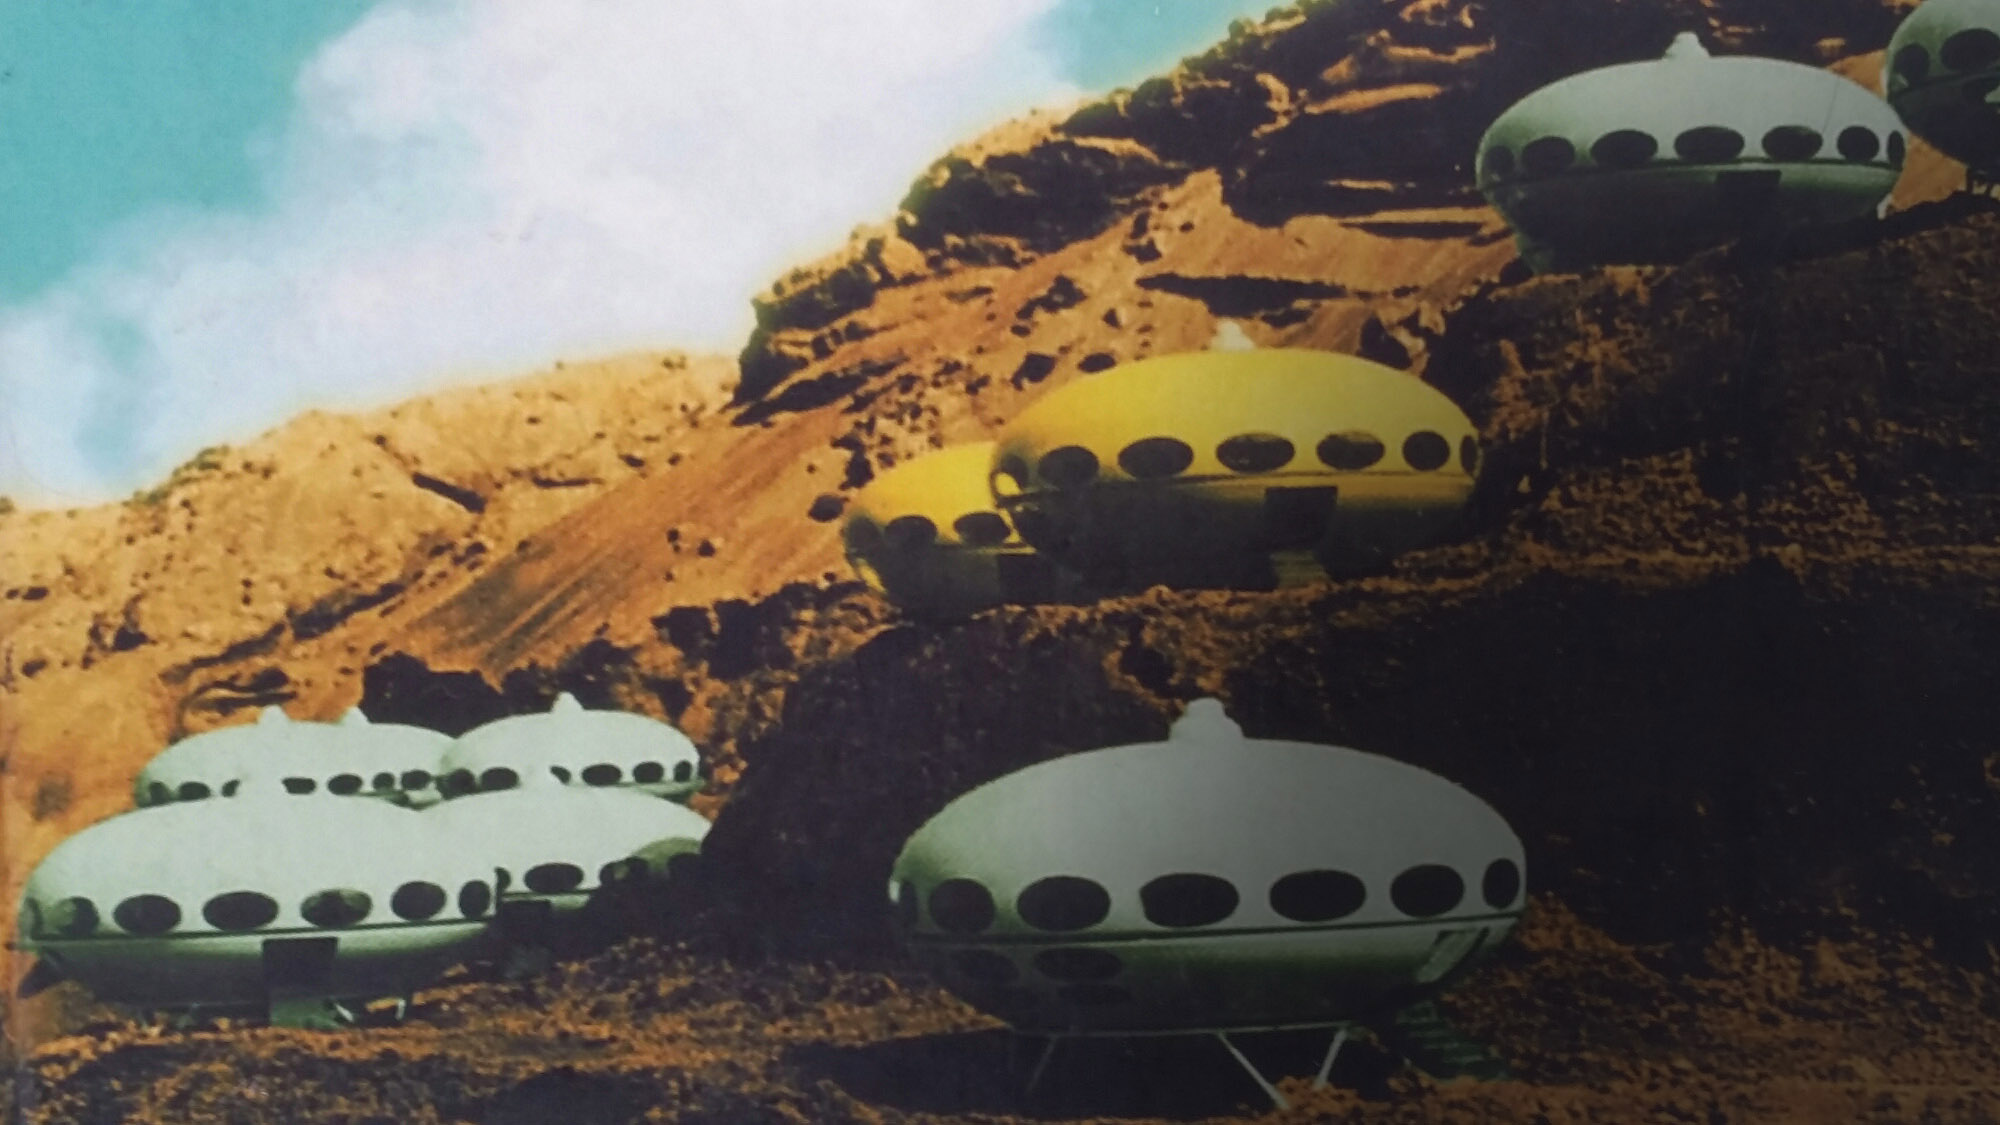 10 flying saucers landed in a mars-like desert scape. 